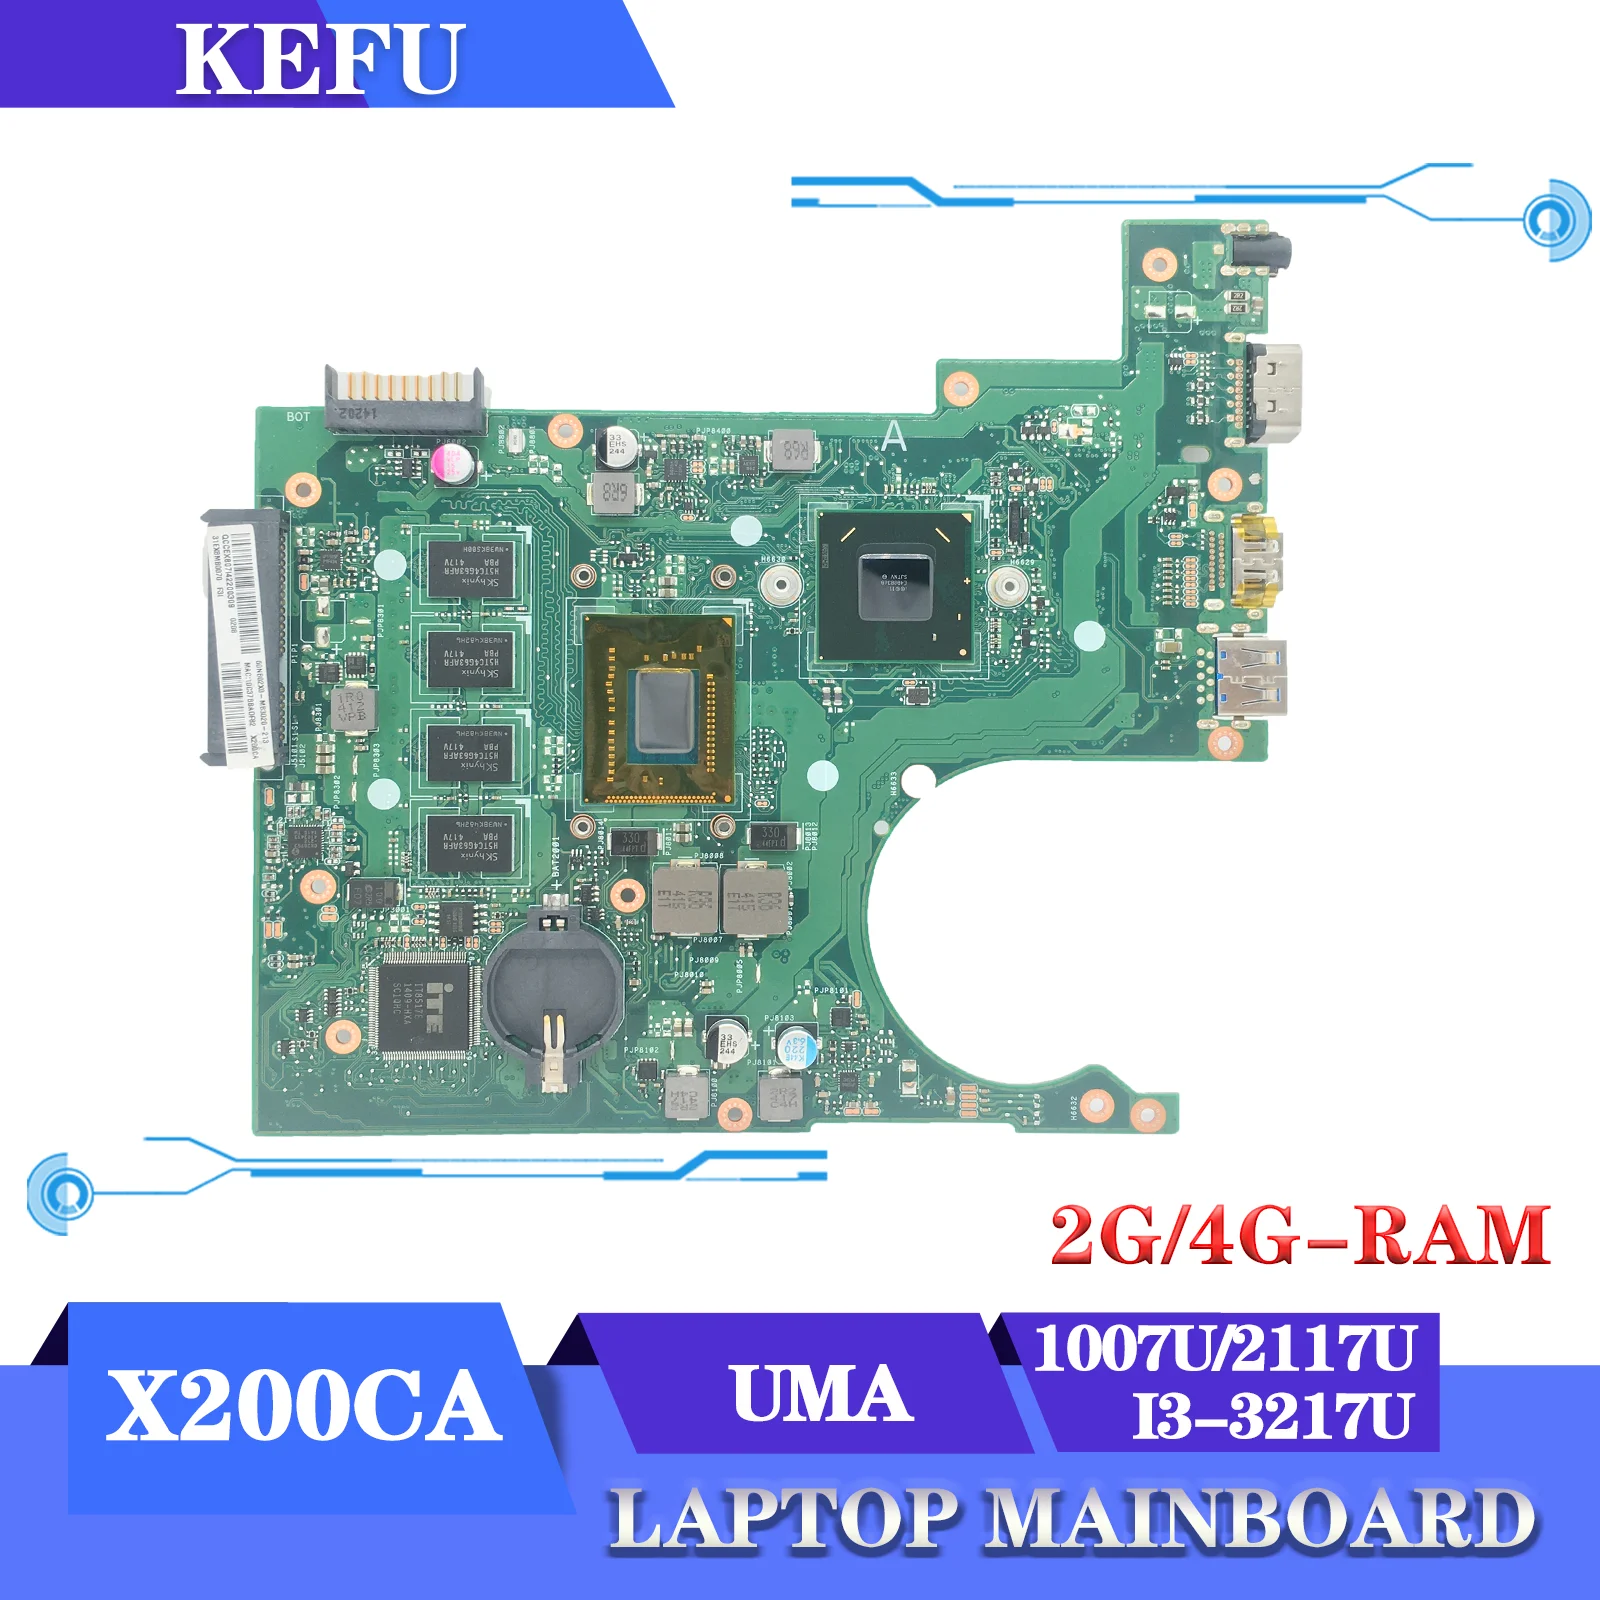 

KEFU X200C Mainboard For ASUS Vivobook F200CA X200CA Laptop Motherboard 1007U/2117U I3-3217U 2G/4G-RAM Maintherboard